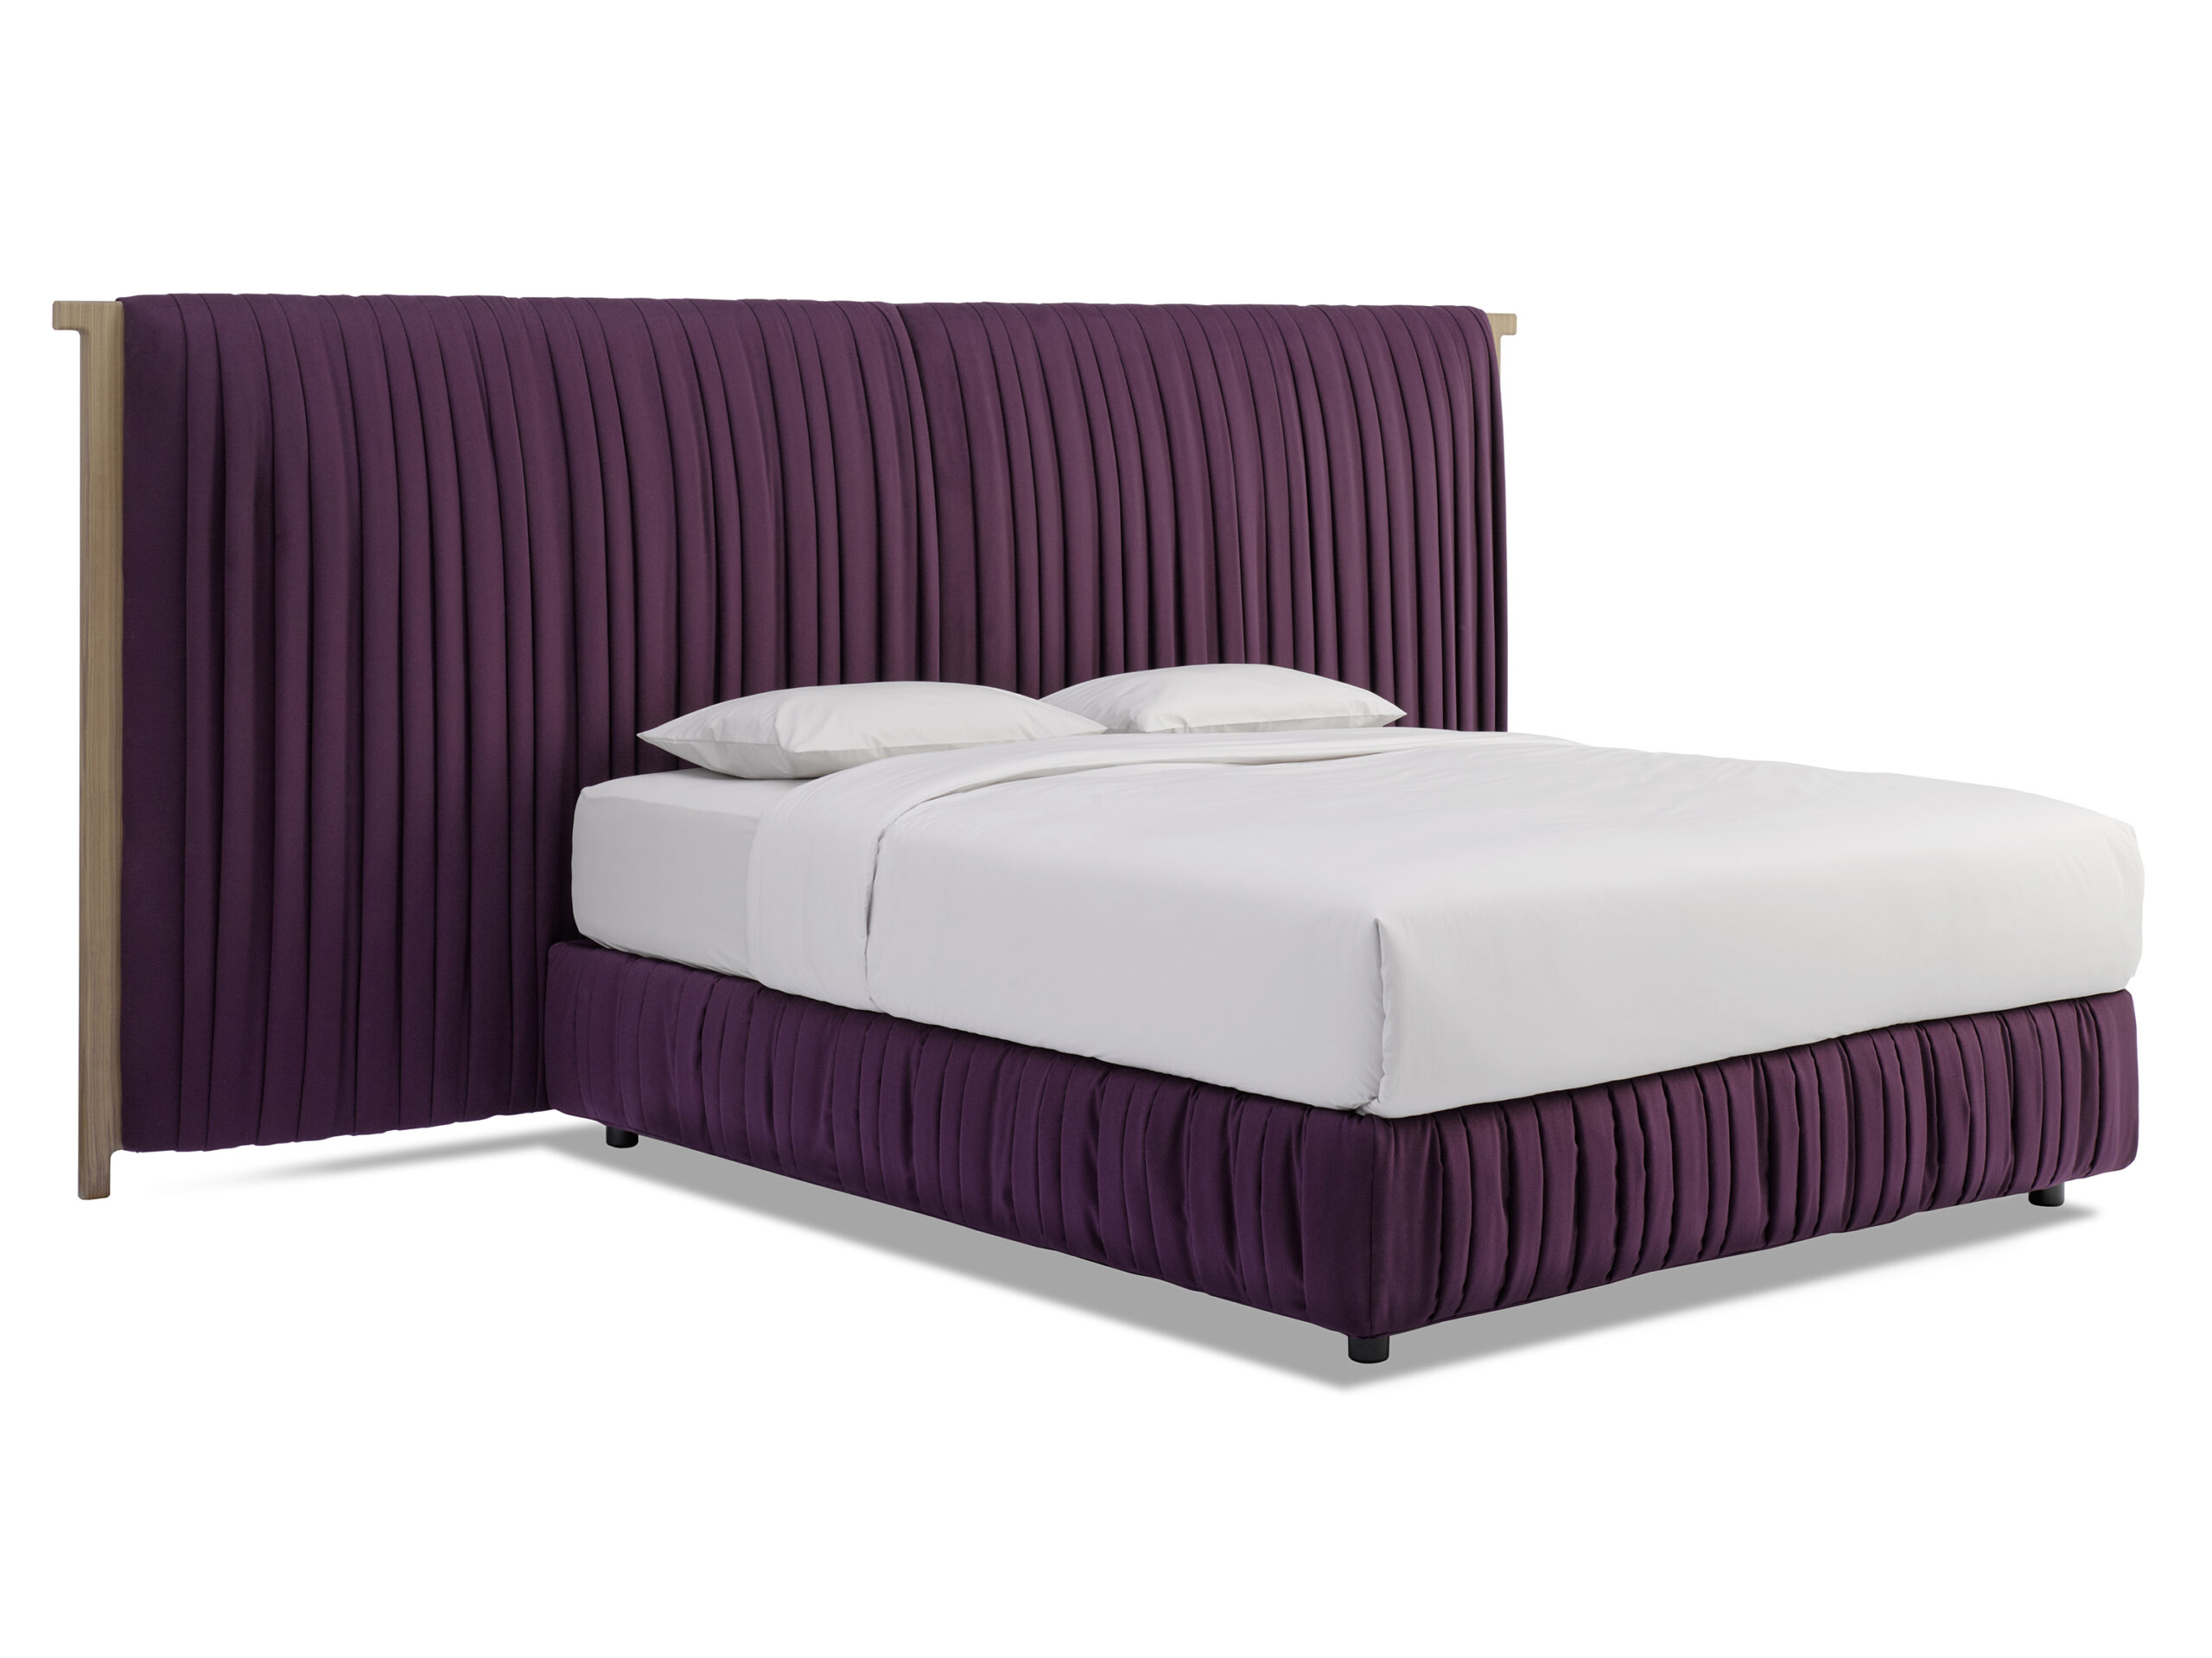 Sipario bed designed by Debiasi Sandri for Schramm